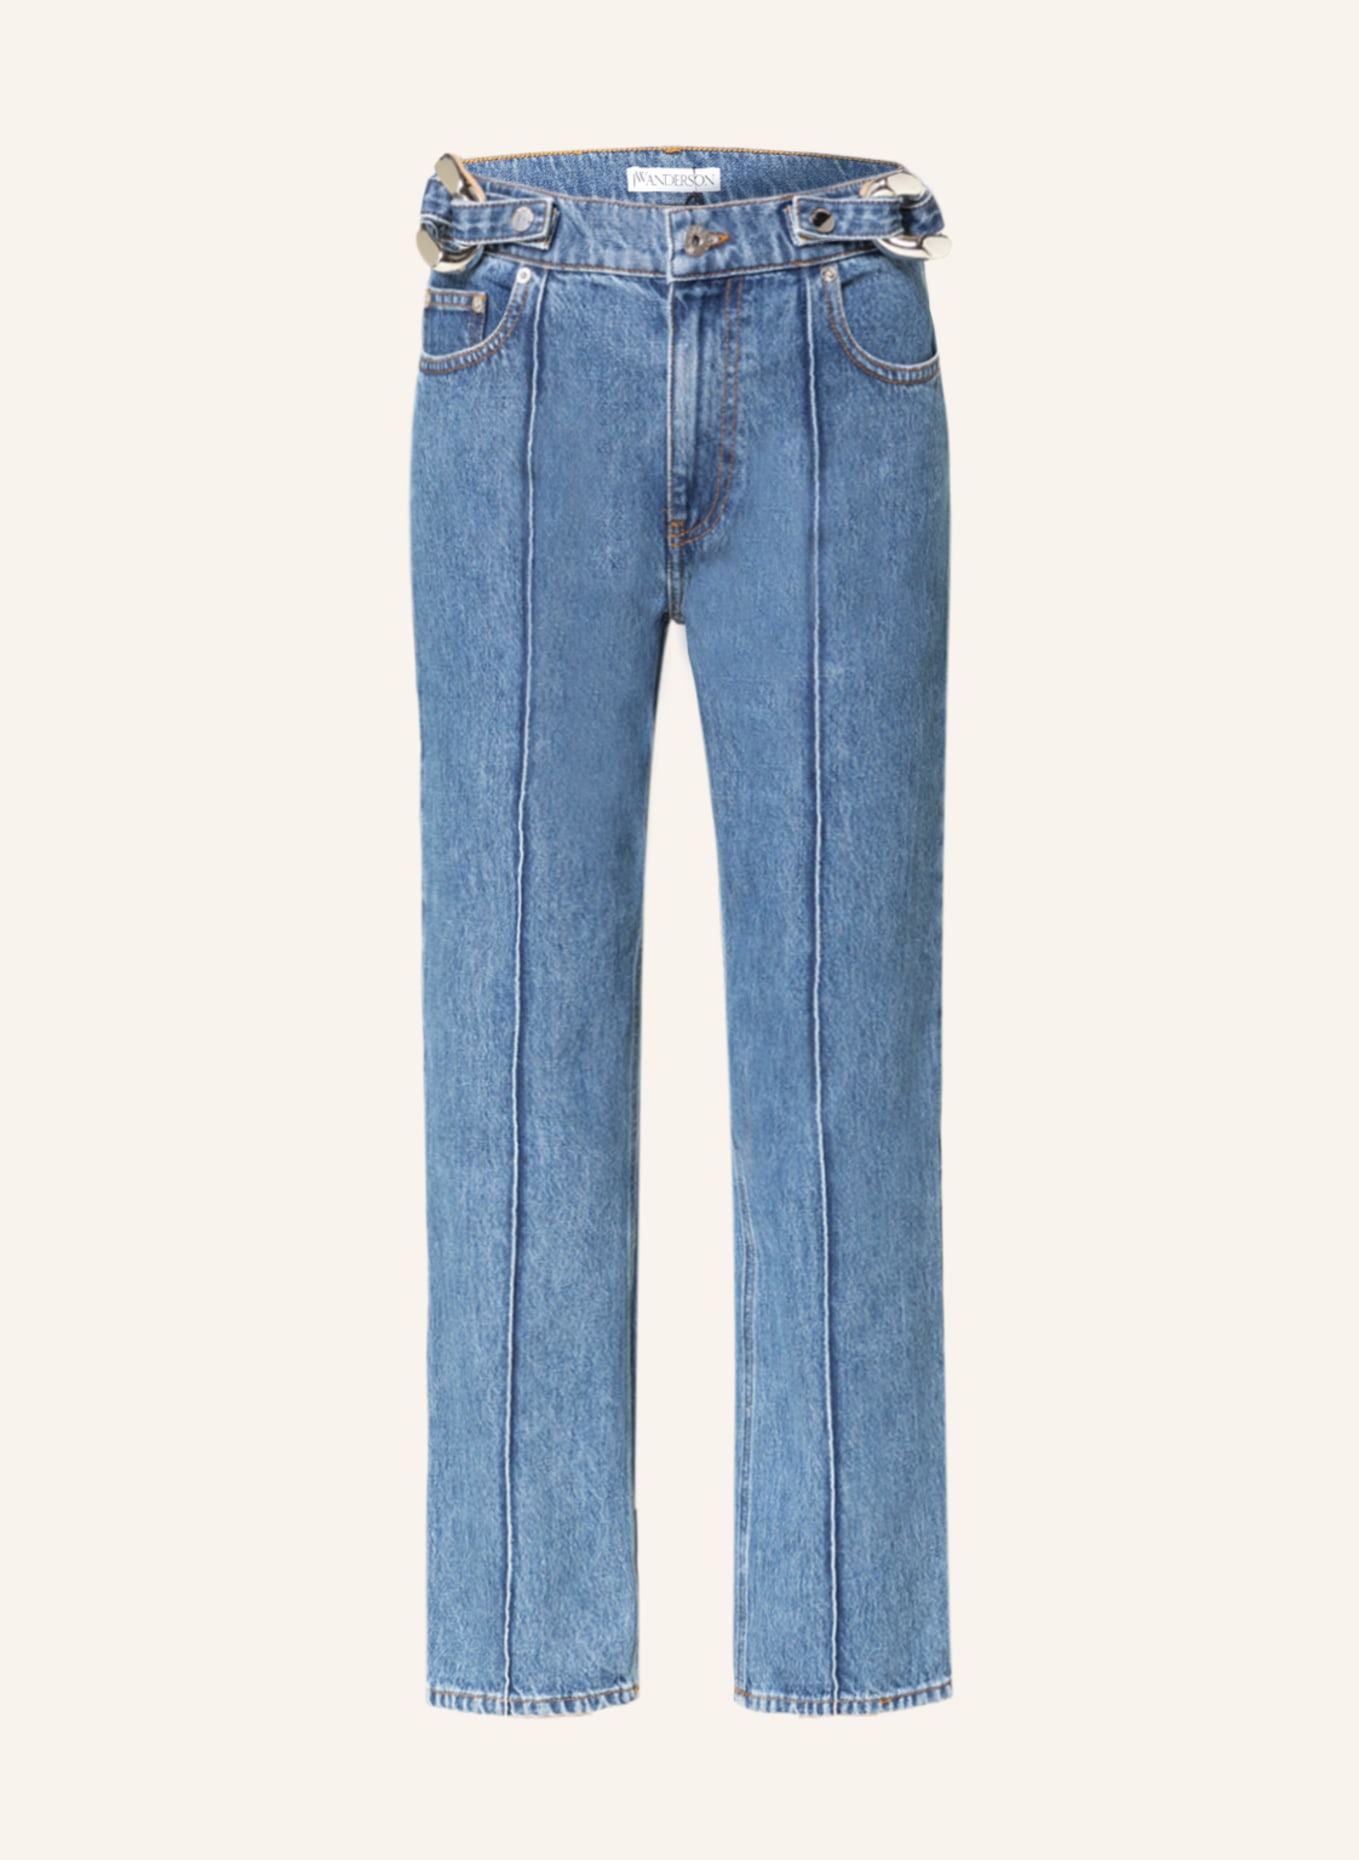 JW ANDERSON 7/8-Jeans, Farbe: 804 light blue (Bild 1)